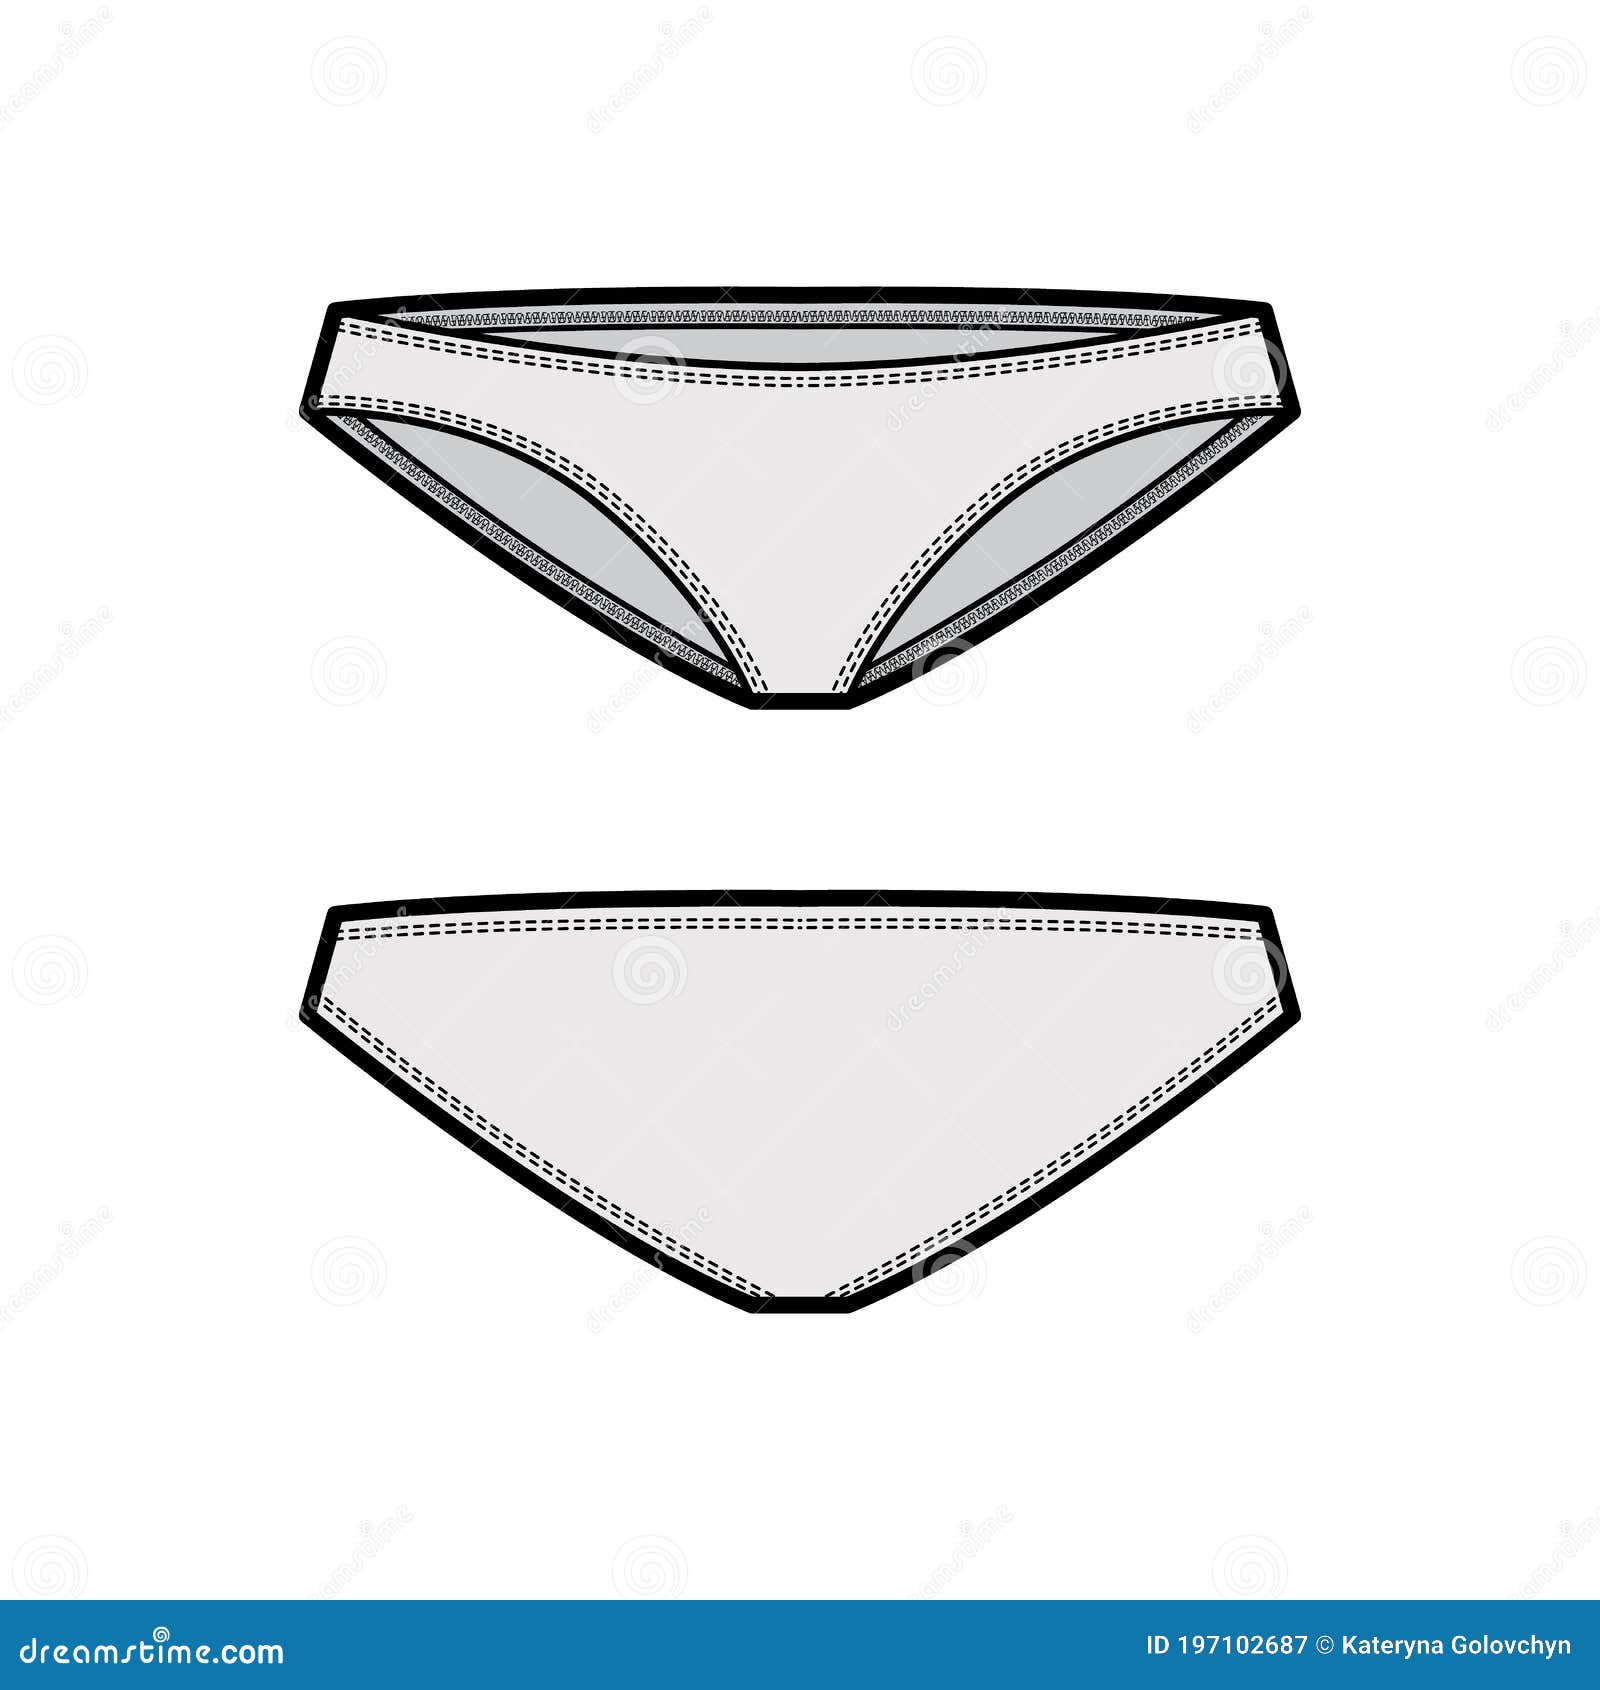 Bikinis Technical Fashion Illustration with Elastic Waistband, Low Rise,  Medium Coverage. Flat Cheekini Panties Briefs Stock Vector - Illustration  of apparel, drawers: 197102687